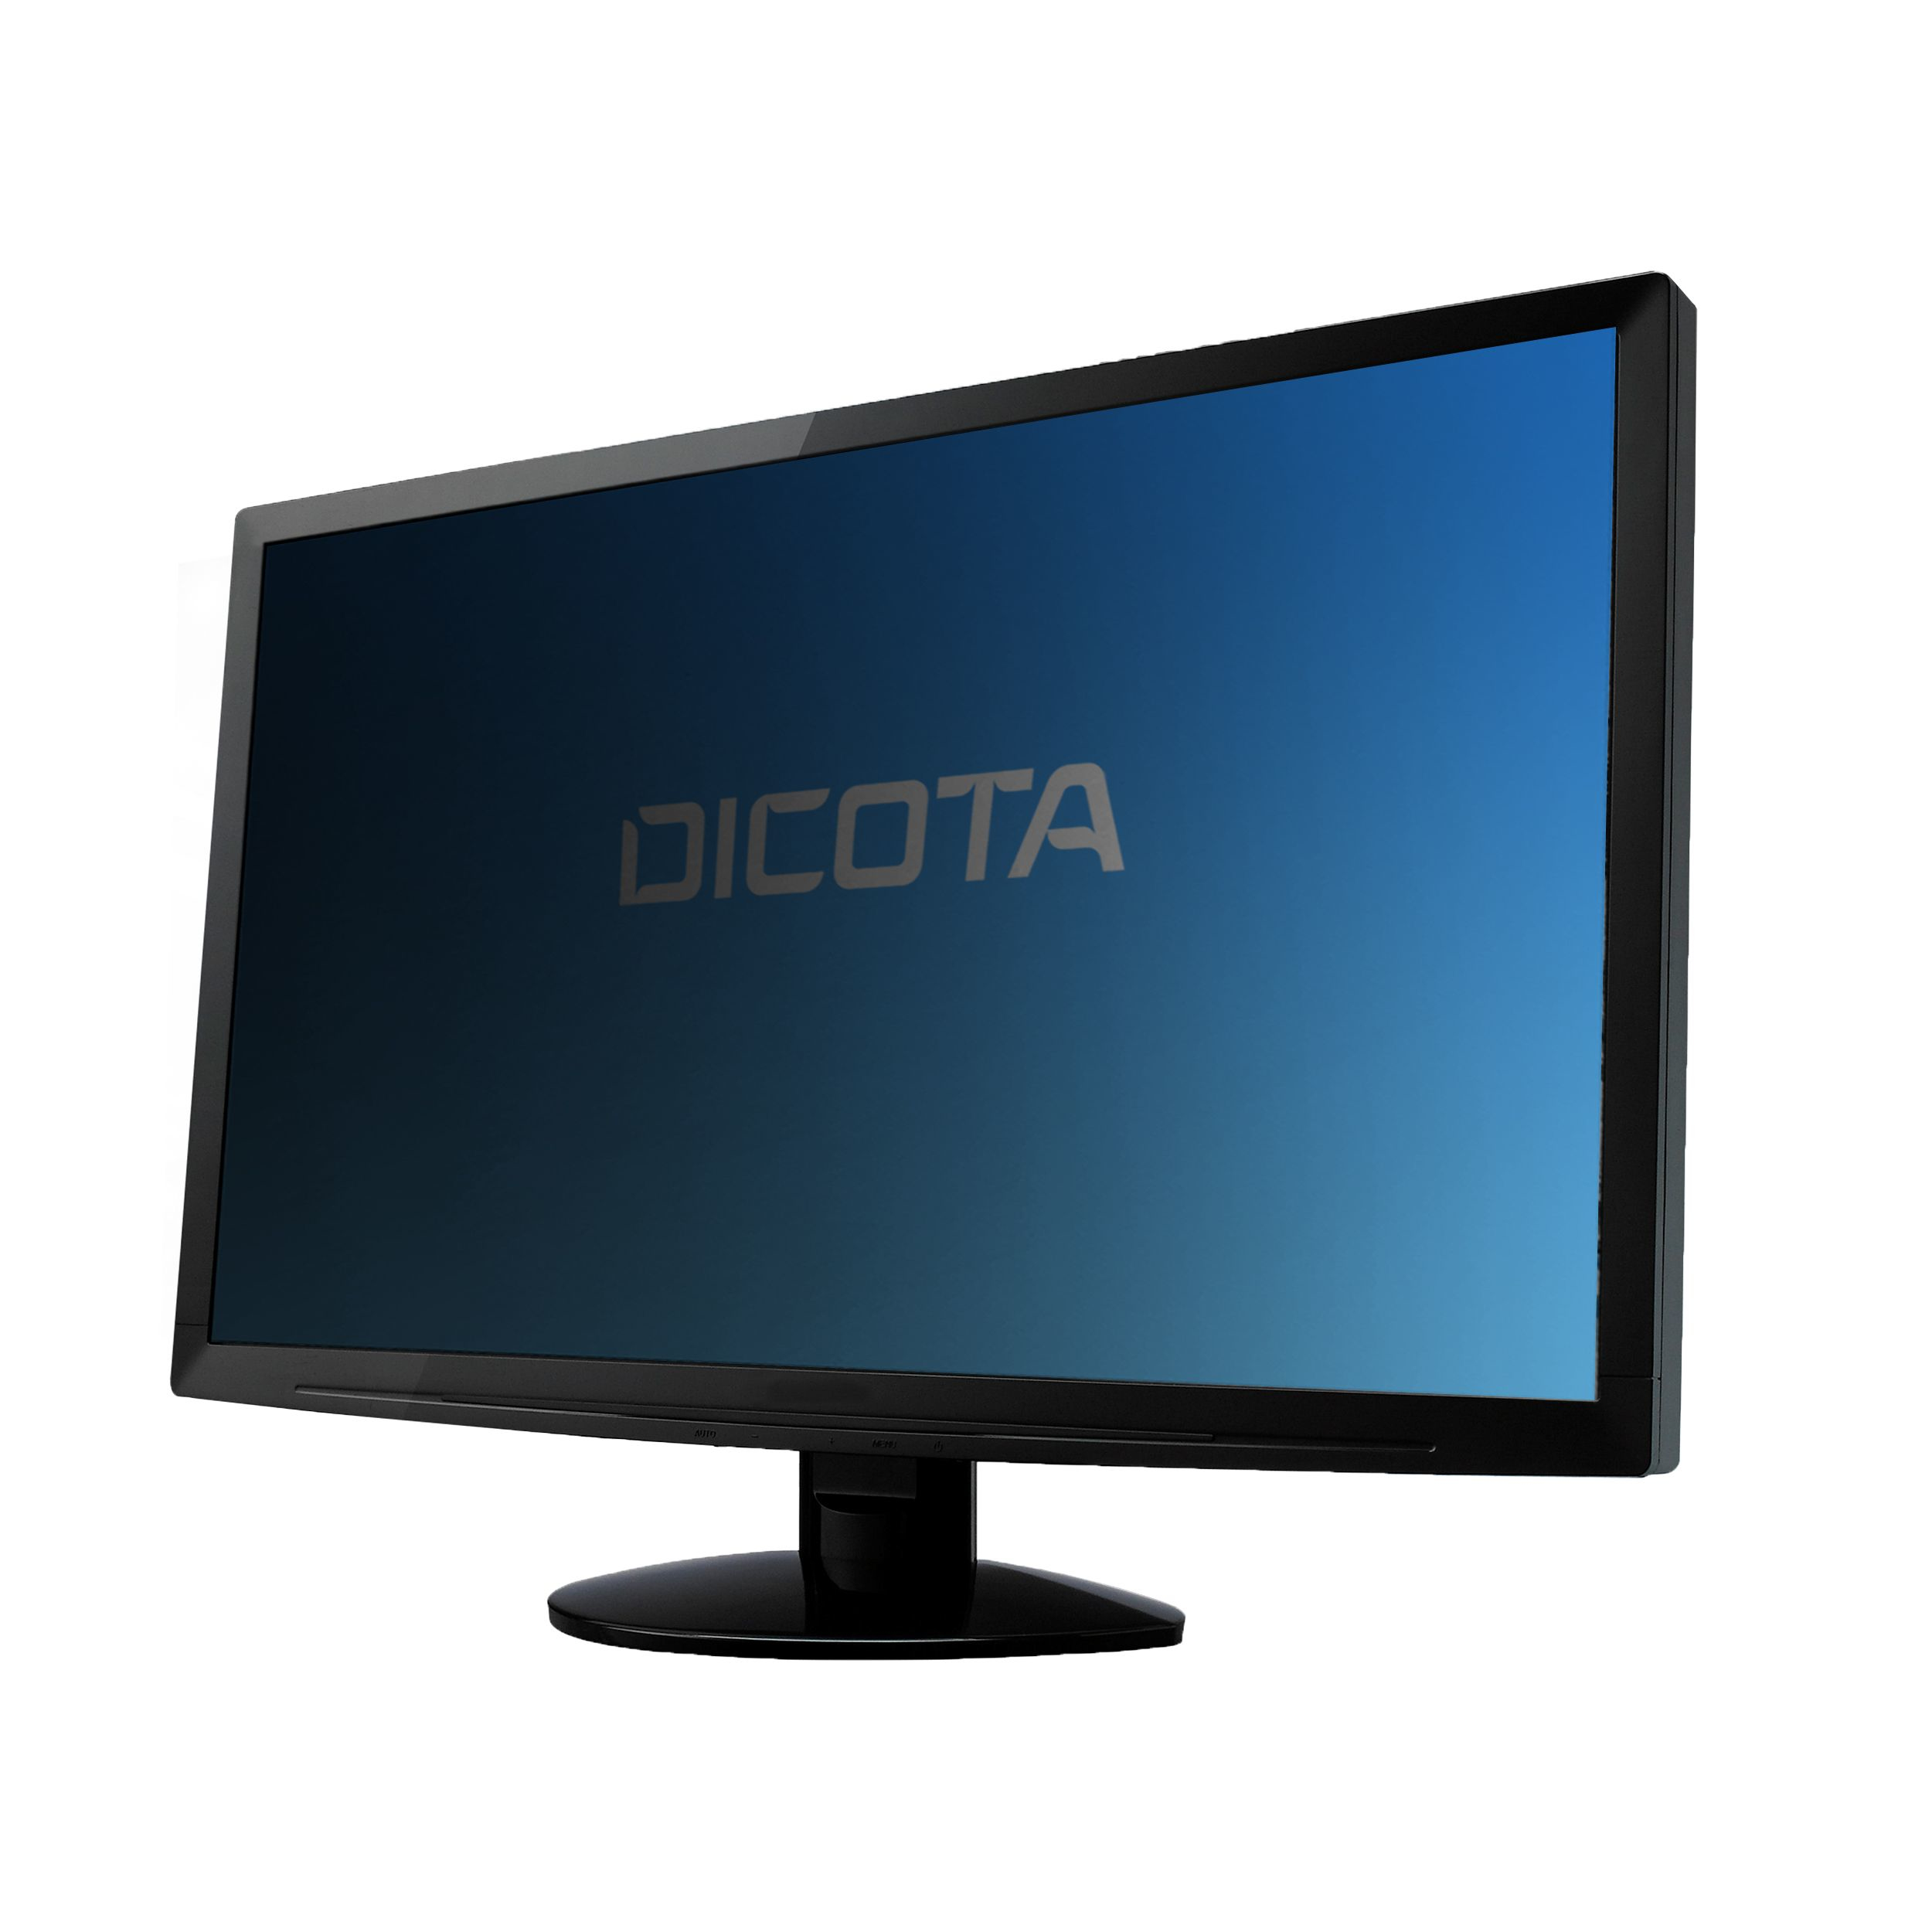 Dicota Secret - Blickschutzfilter für Bildschirme - 2-Wege - entfernbar - klebend - 71,1 cm Breitbild (28 Zoll Breitbild)